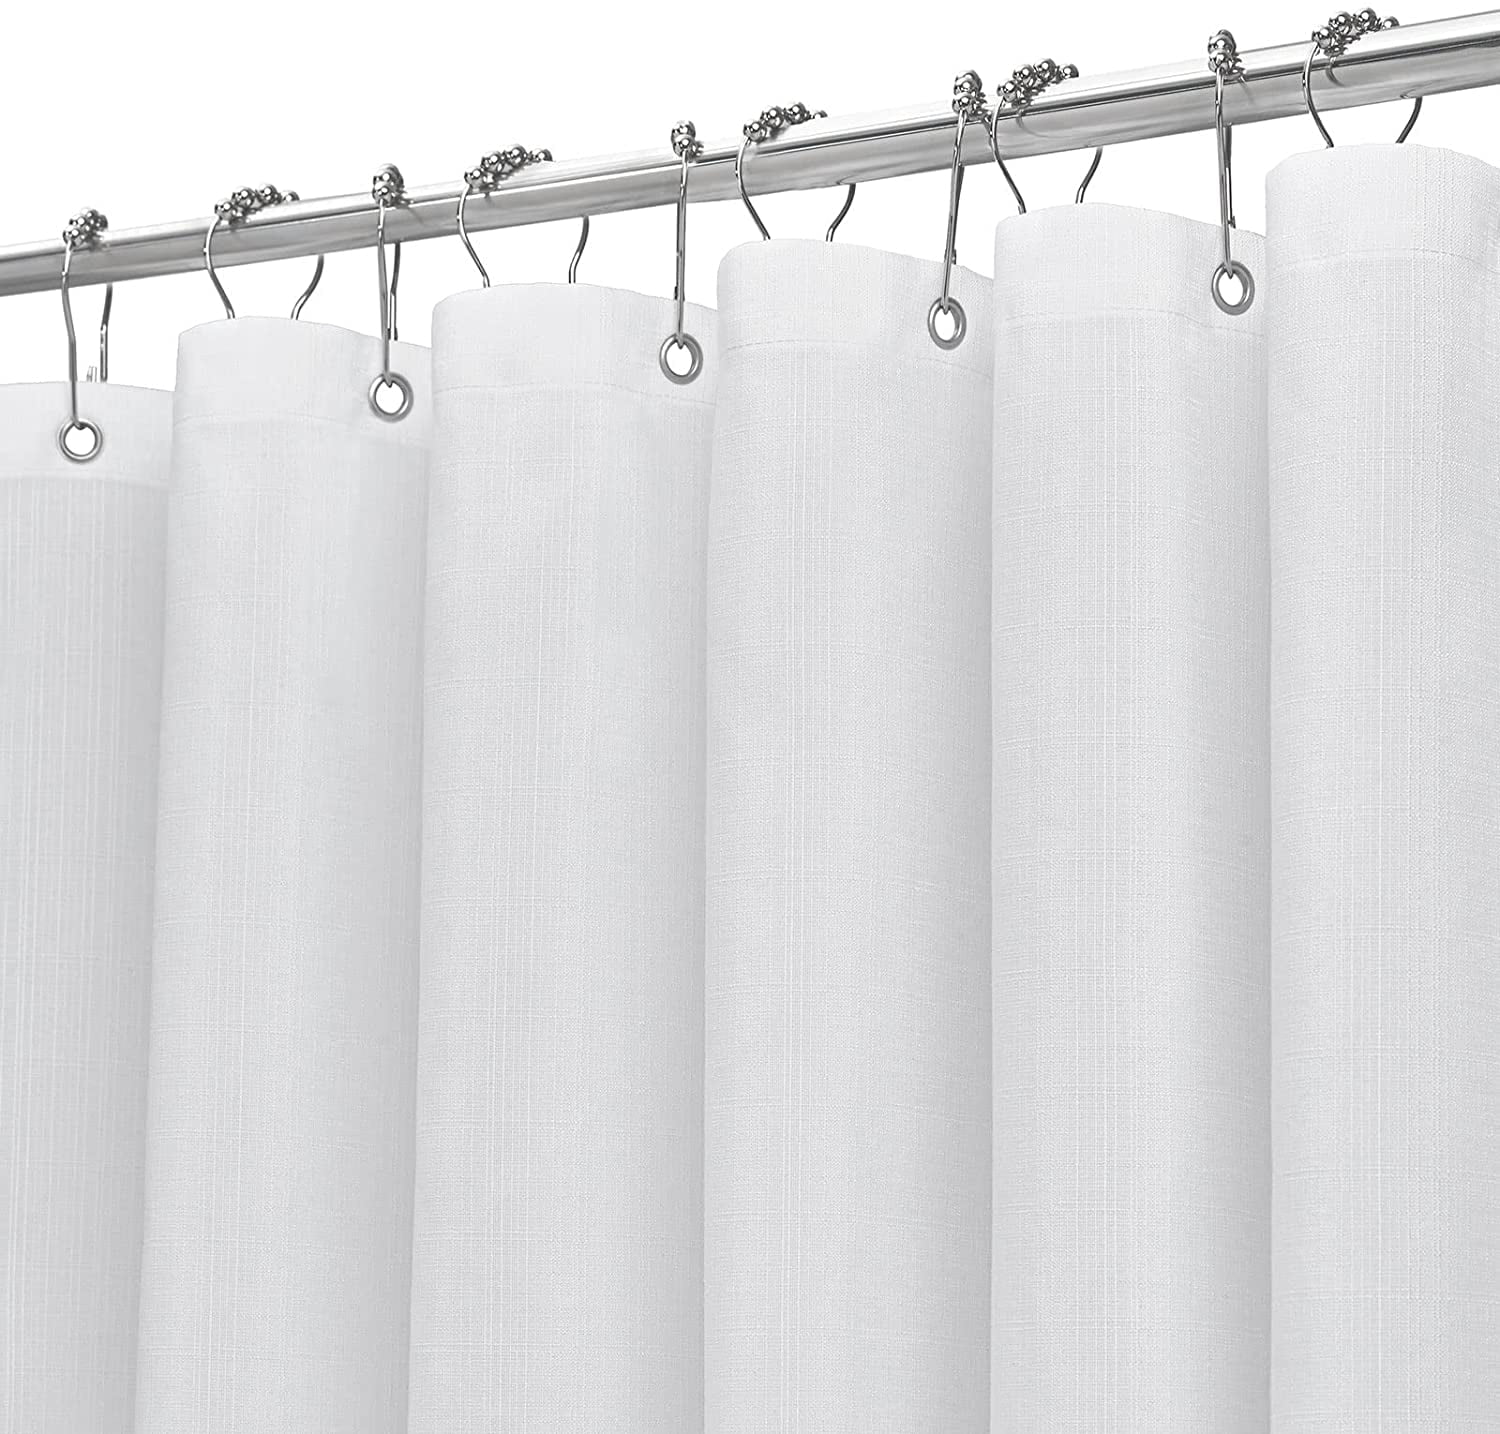 12 Hooks Bathroom Linen Shower Curtains Cheap Heavy Duty Waterproof Fabric 